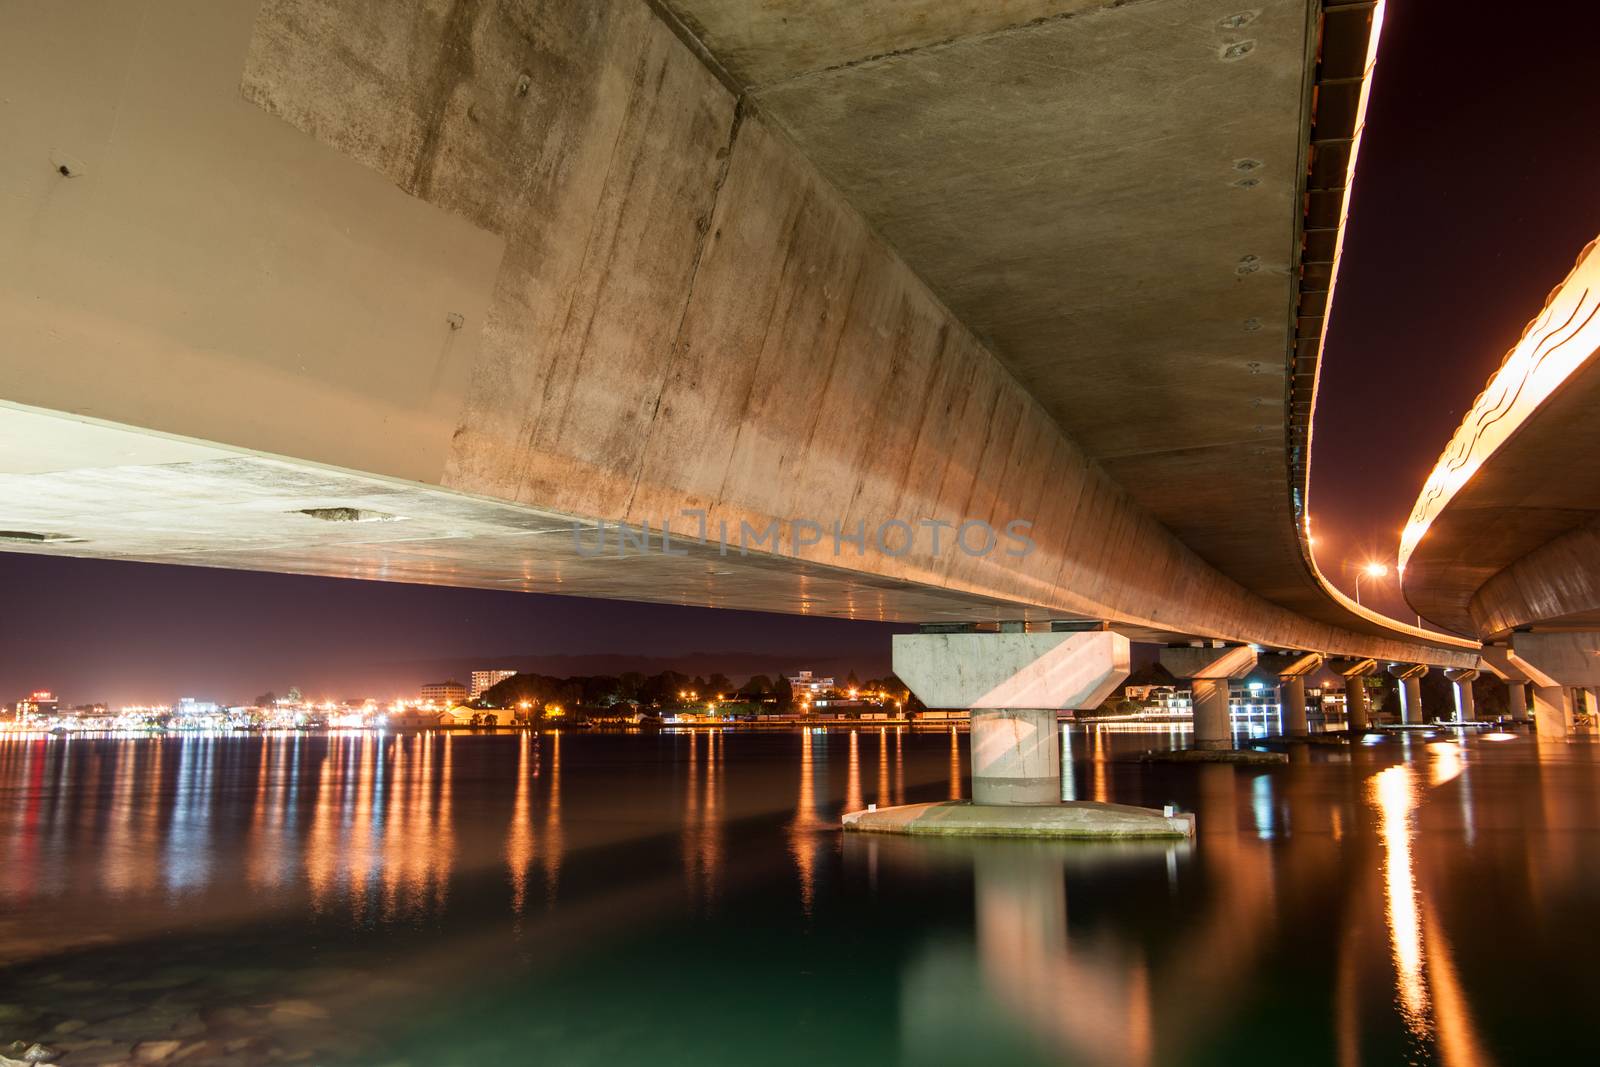 Under Tauranga Harbour Bridge at night by brians101